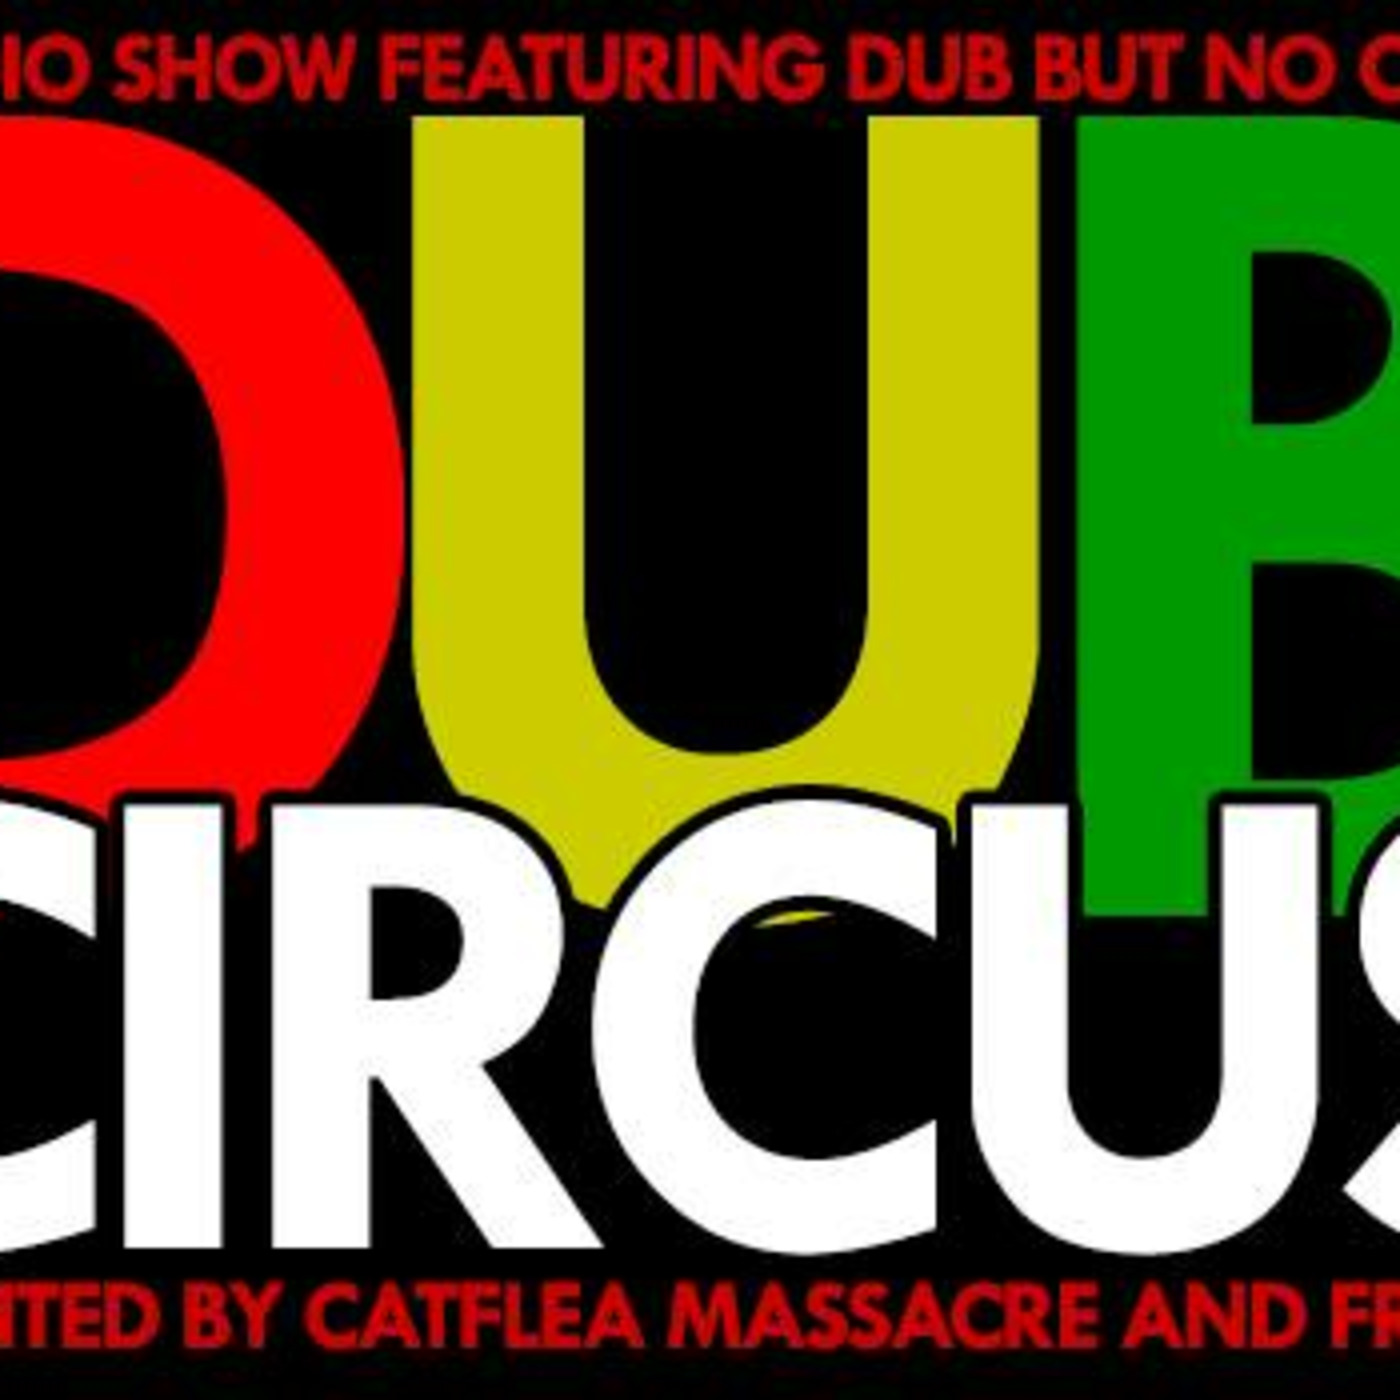 Episode 3026: Dub Circus Show 228 On bootboyradio.net